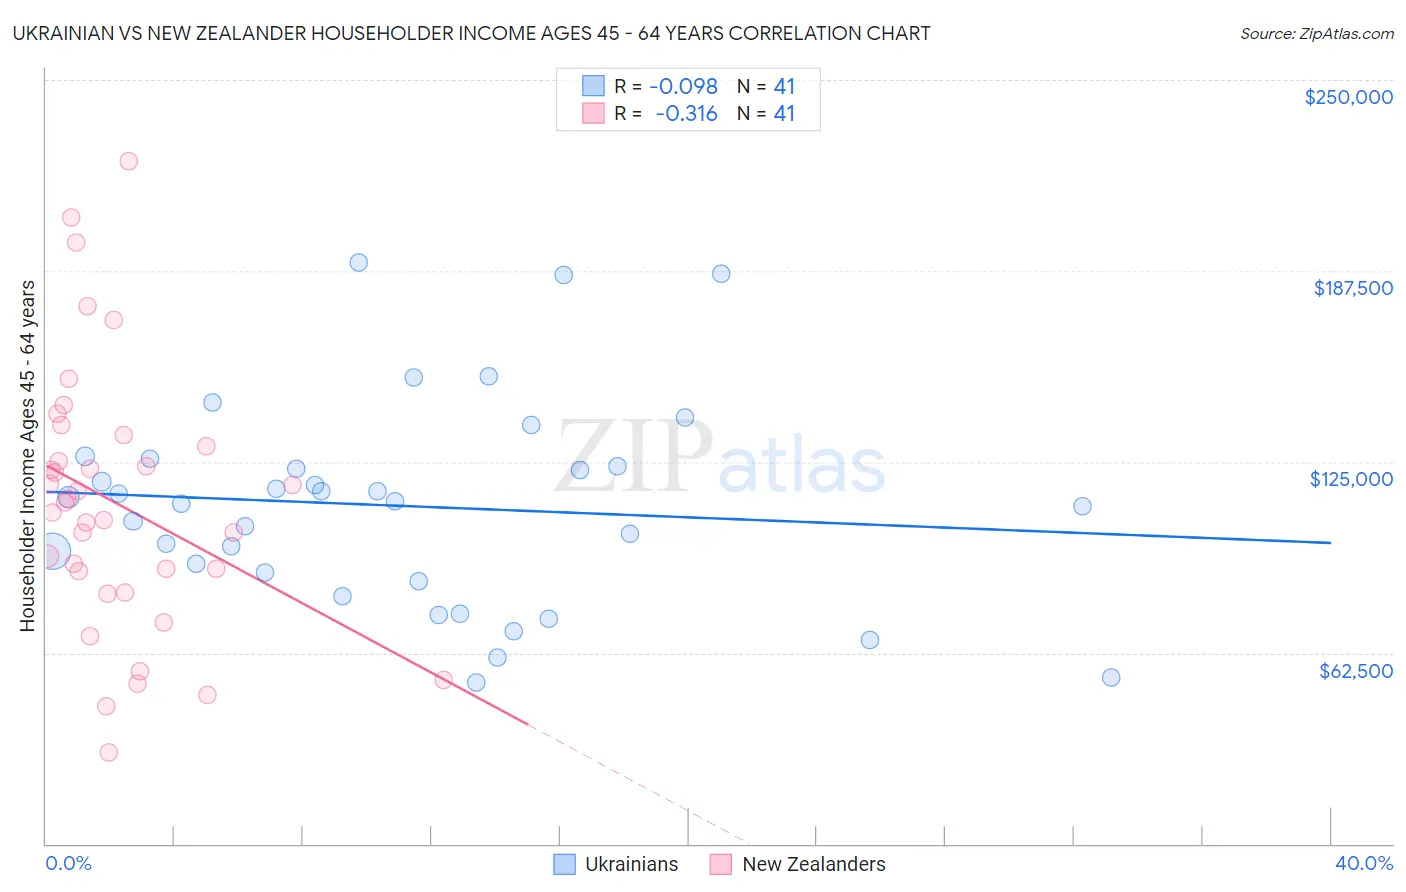 Ukrainian vs New Zealander Householder Income Ages 45 - 64 years